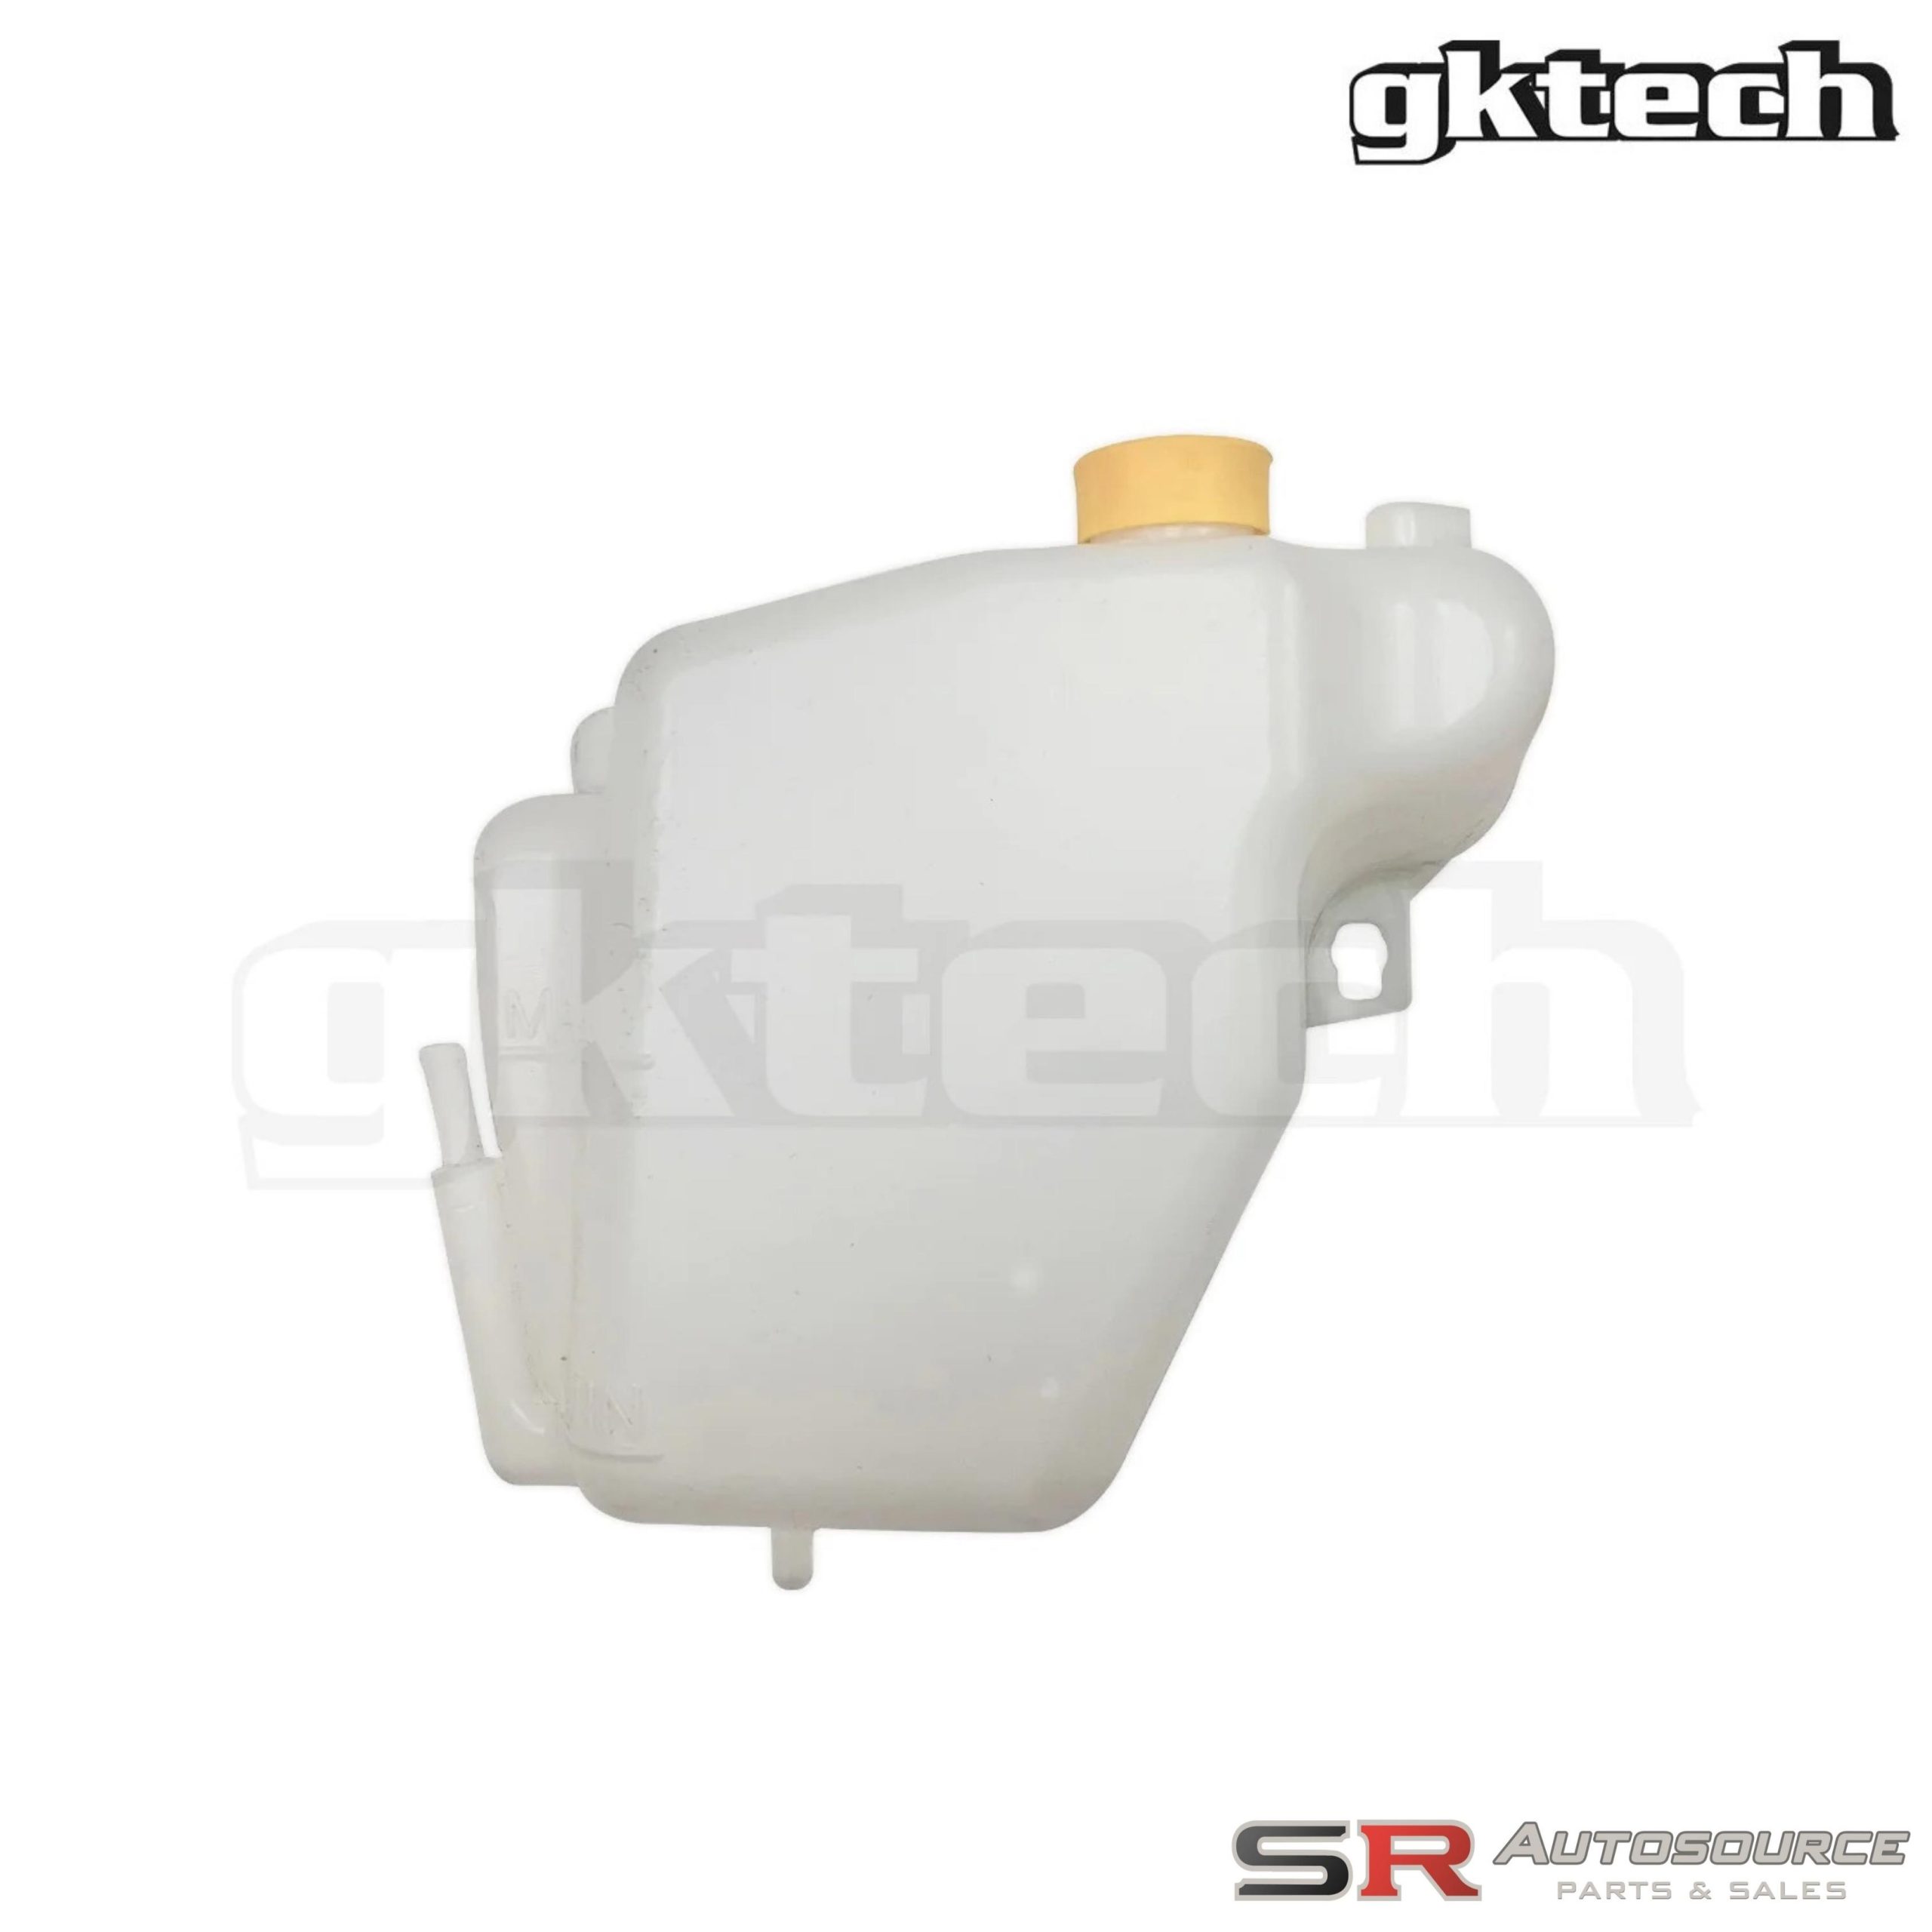 GK Tech R32 Replacement Coolant Overflow Bottle